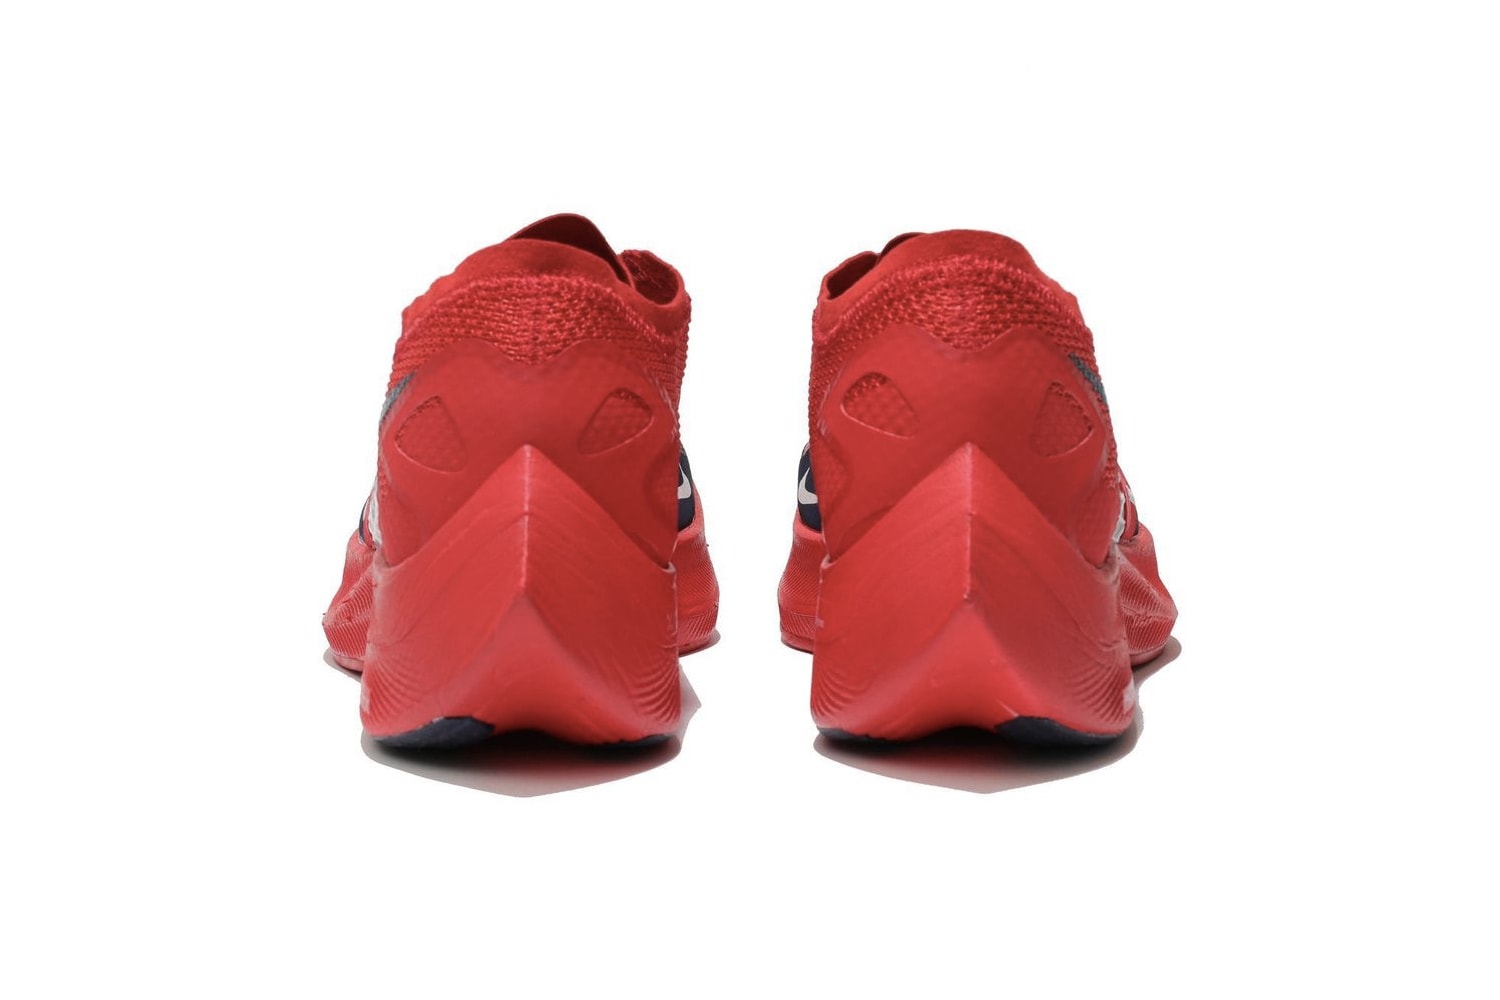 UNDERCOVER x Nike GYAKUSOU 最新聯名系列發售日期率先公開